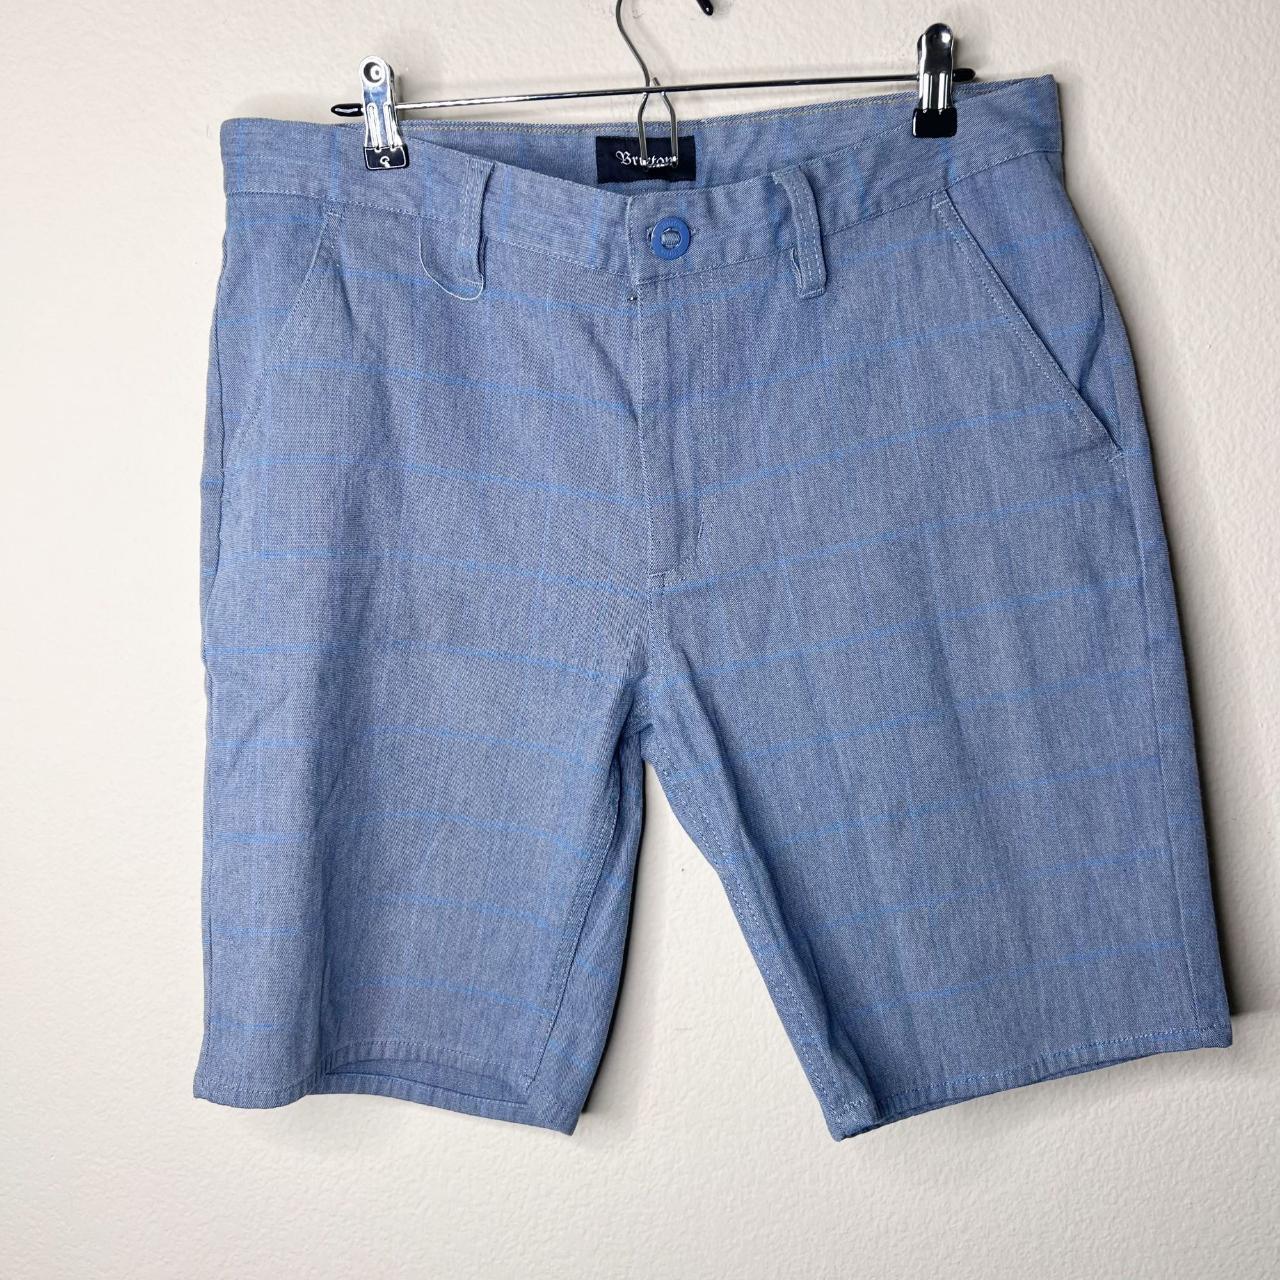 Brixton Men's Grey Shorts (2)